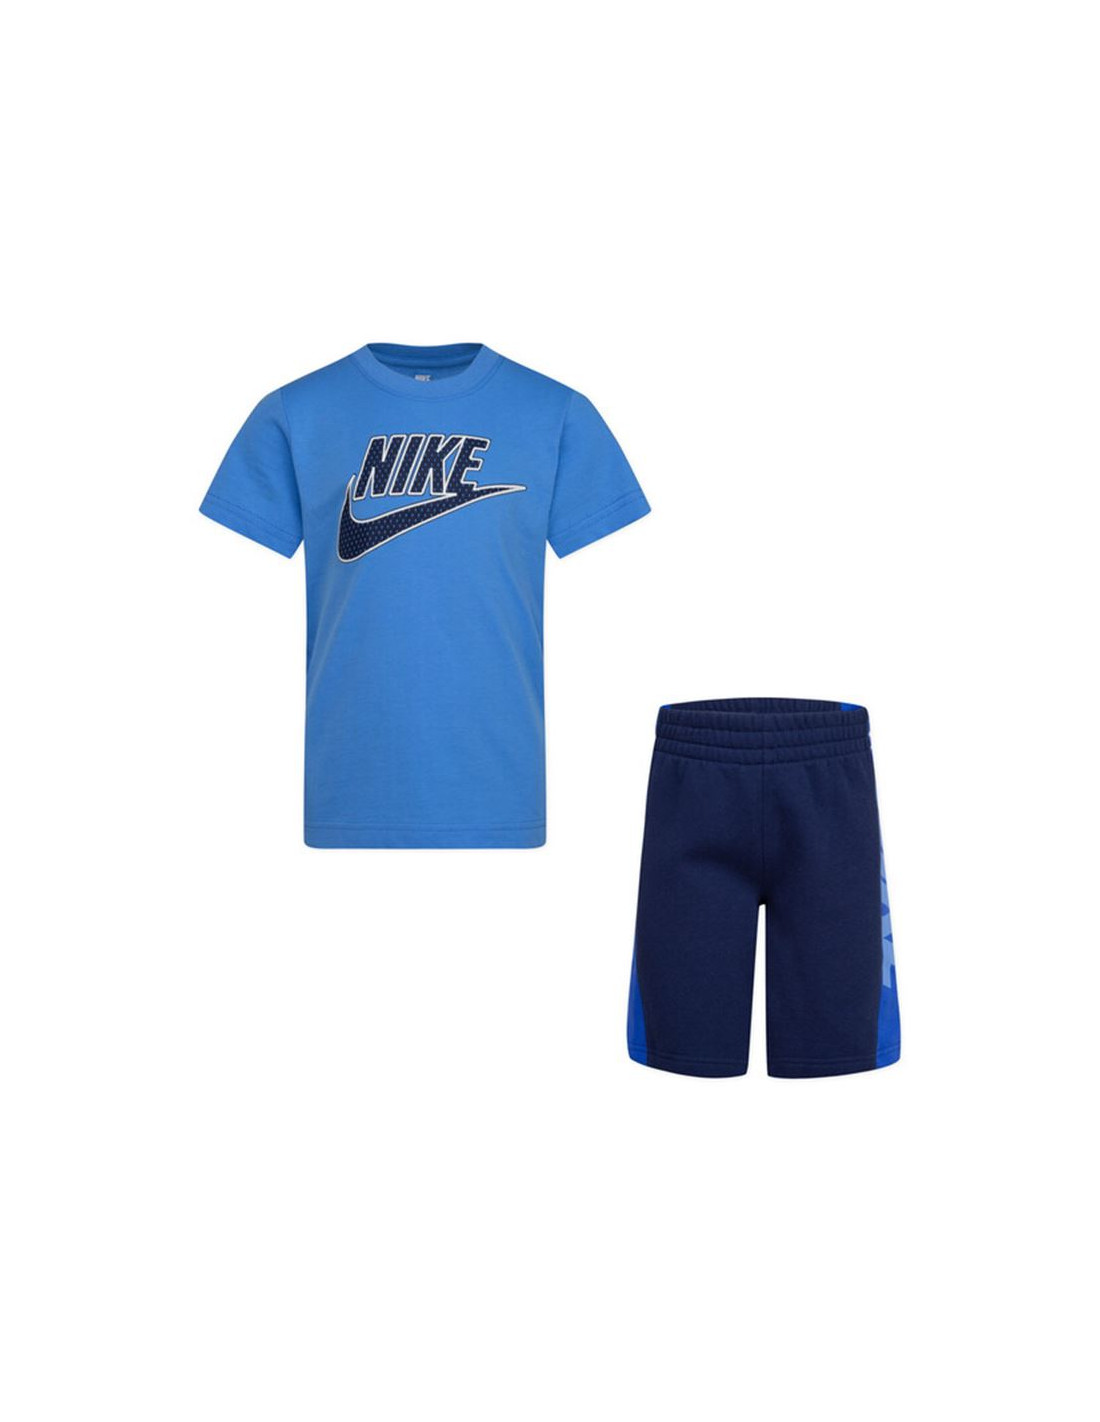 Chándal nike sportswear amplify infantil azul